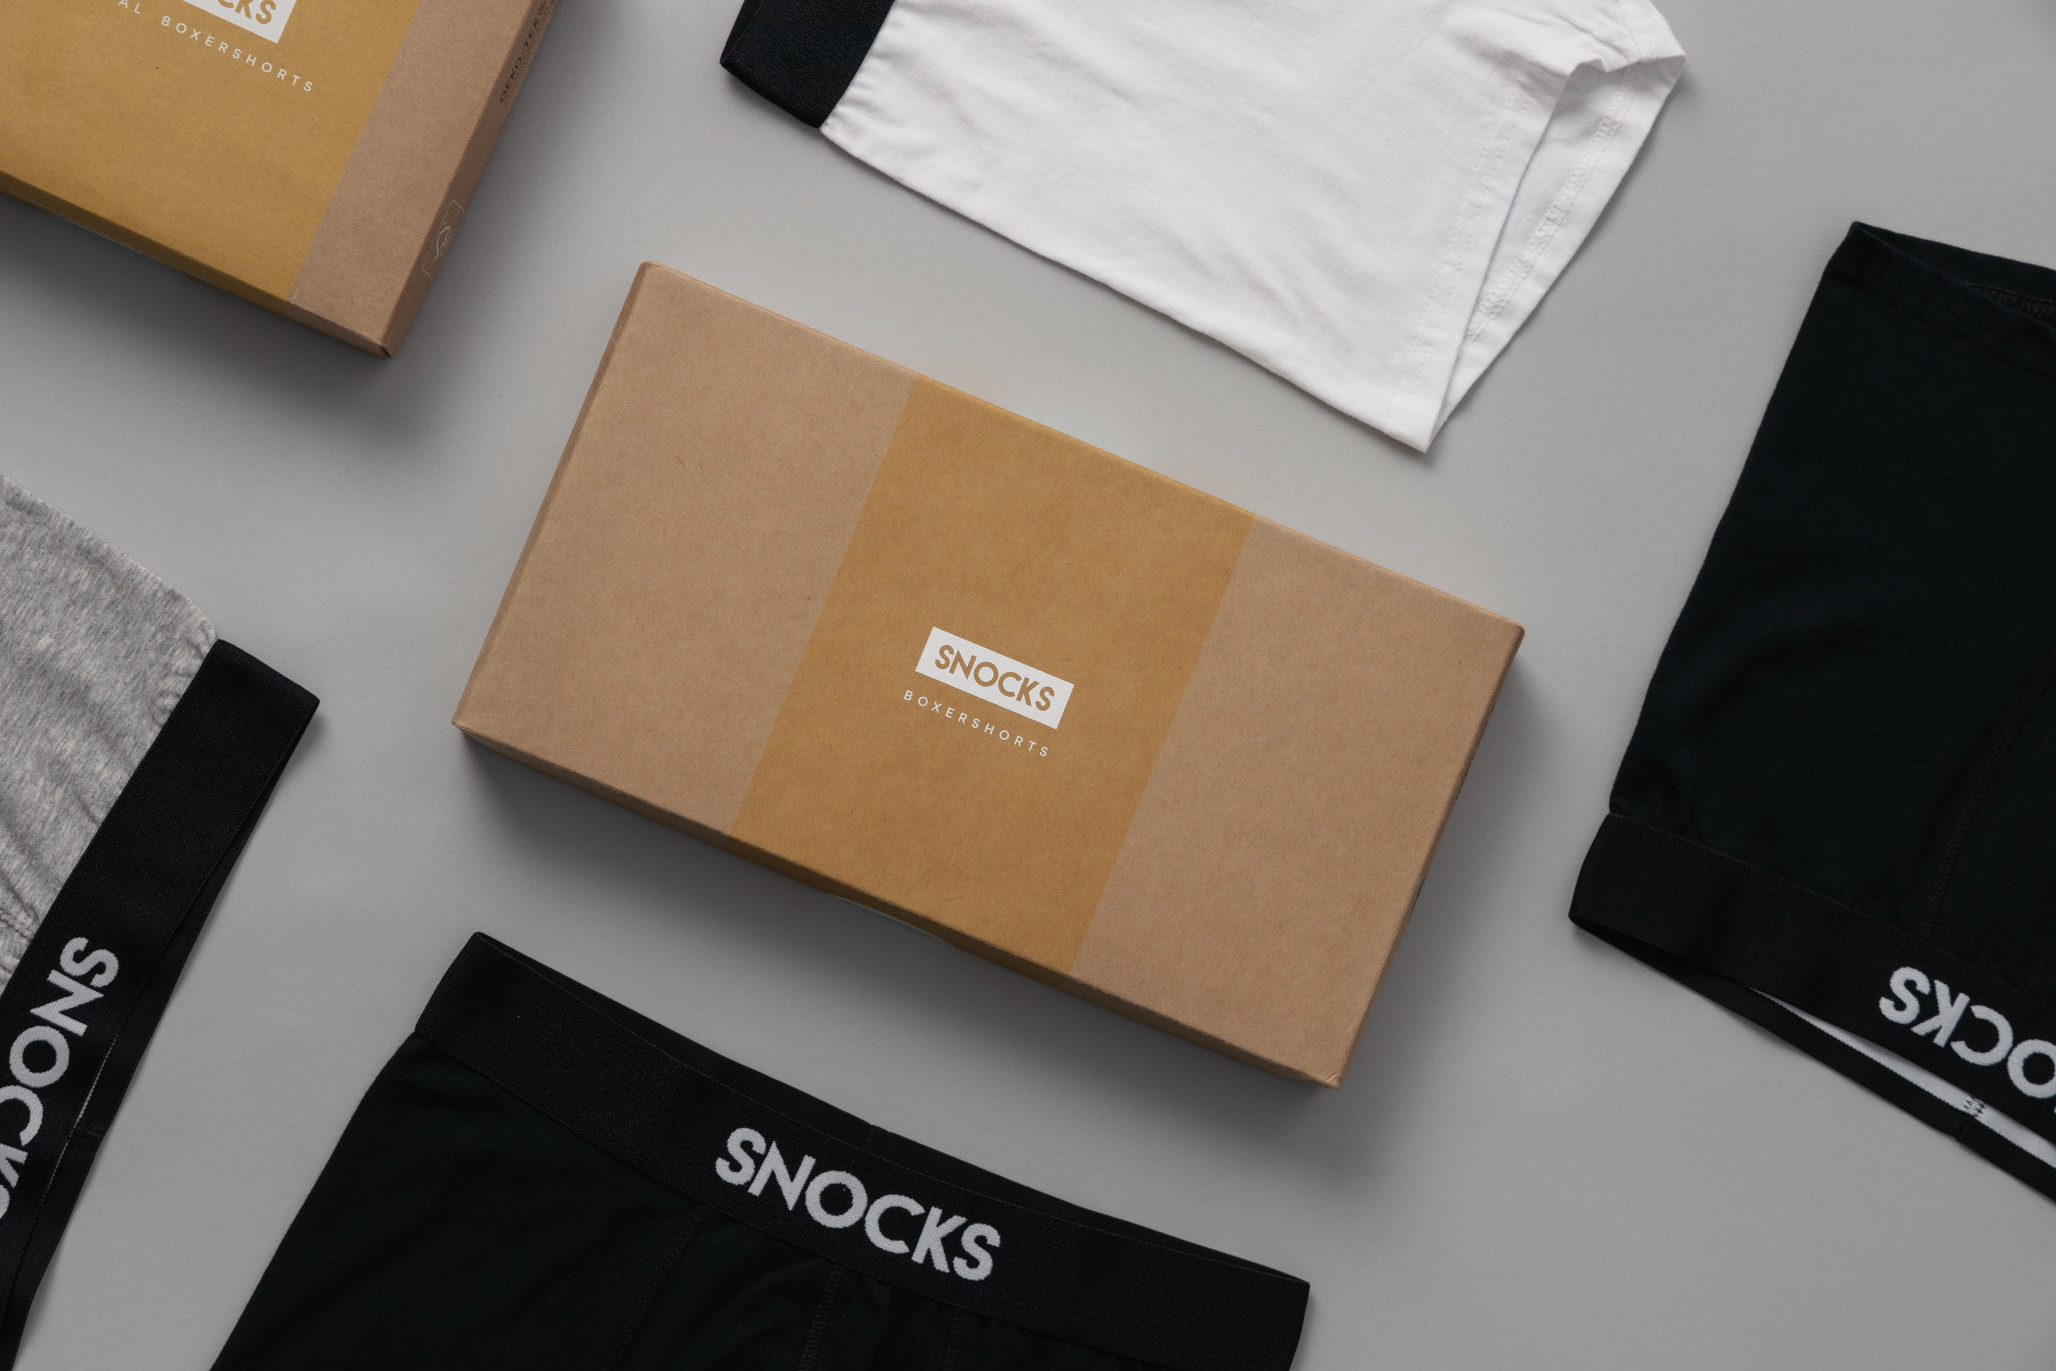 Snocks — Shopify Plus Customer